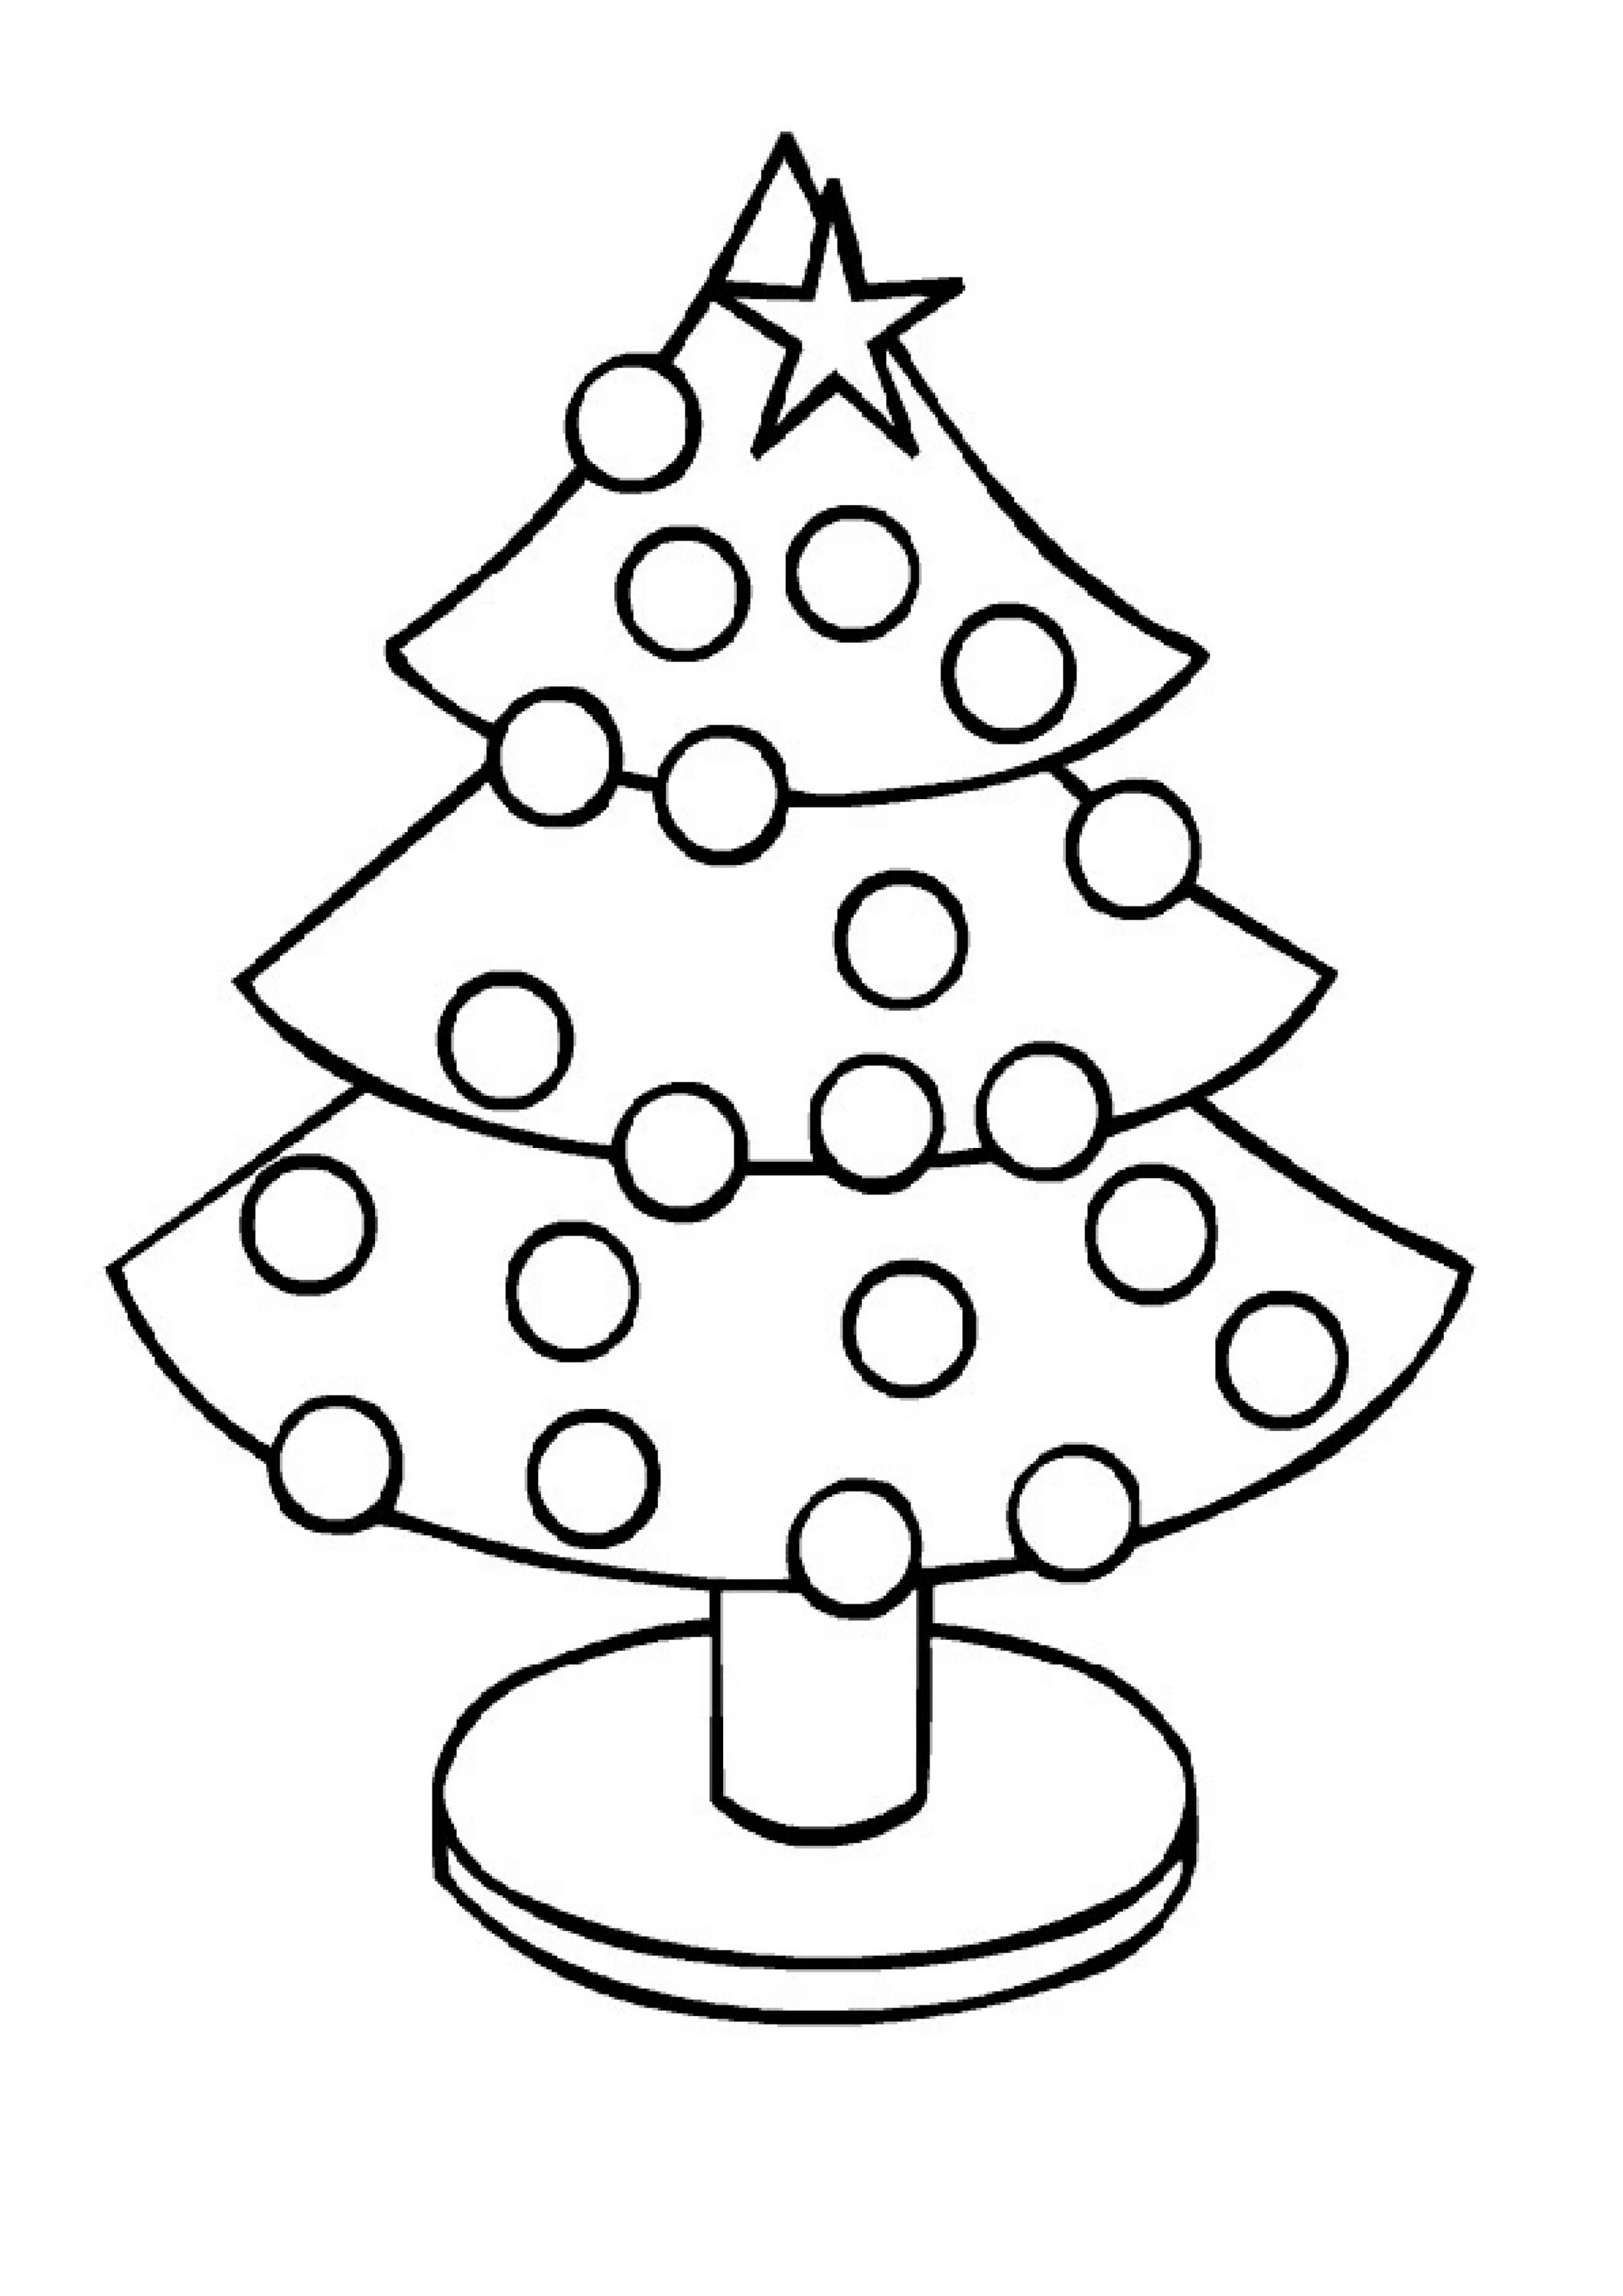 Graceful Christmas tree with balls